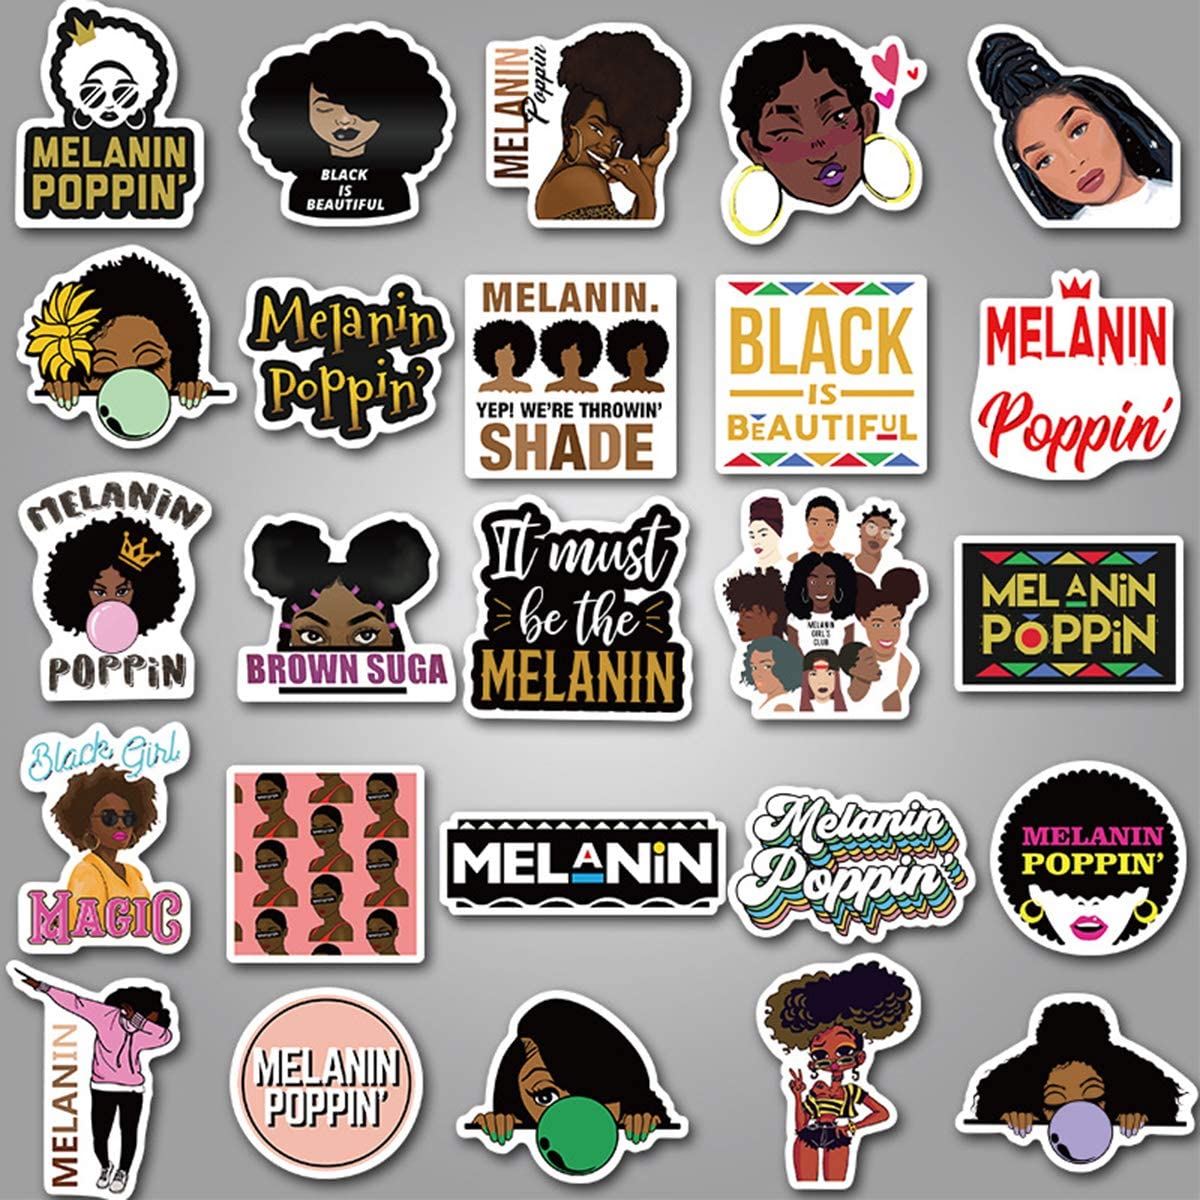 Inspirational Black Girl Melanin Poppin Stickers 50PCS for Laptop Waterproof Durable Trendy PVC Laptop Decal Sticker